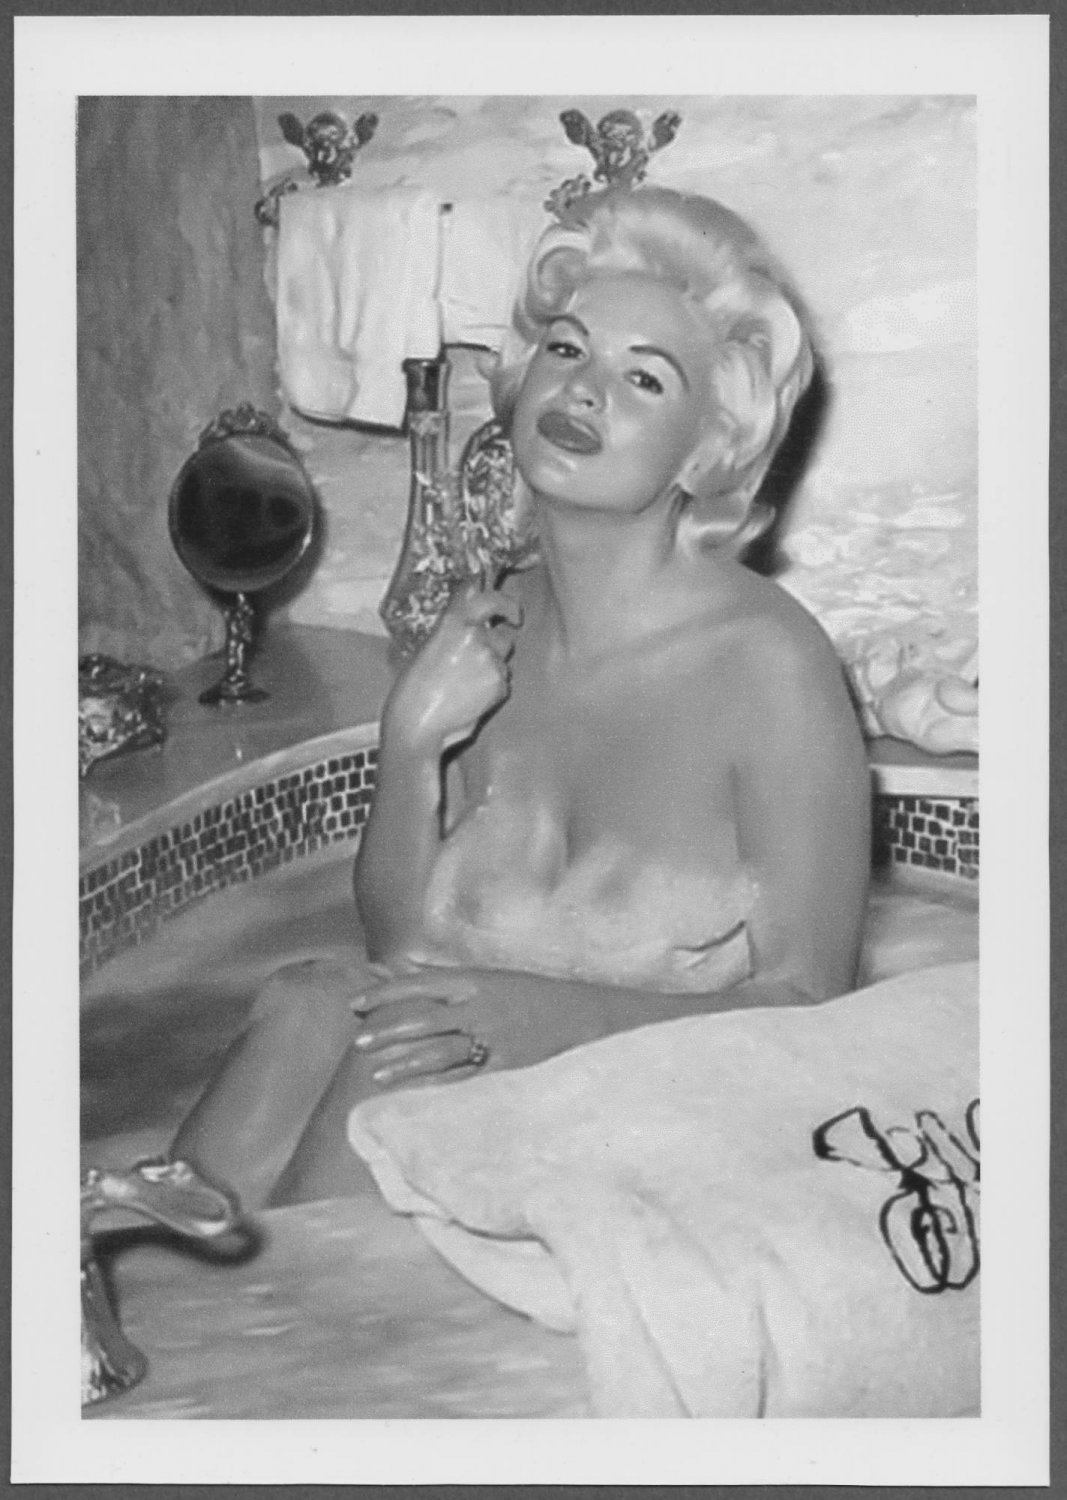 Actress jayne mansfield totally nude bath pose new reprint photo 5X7 #119.